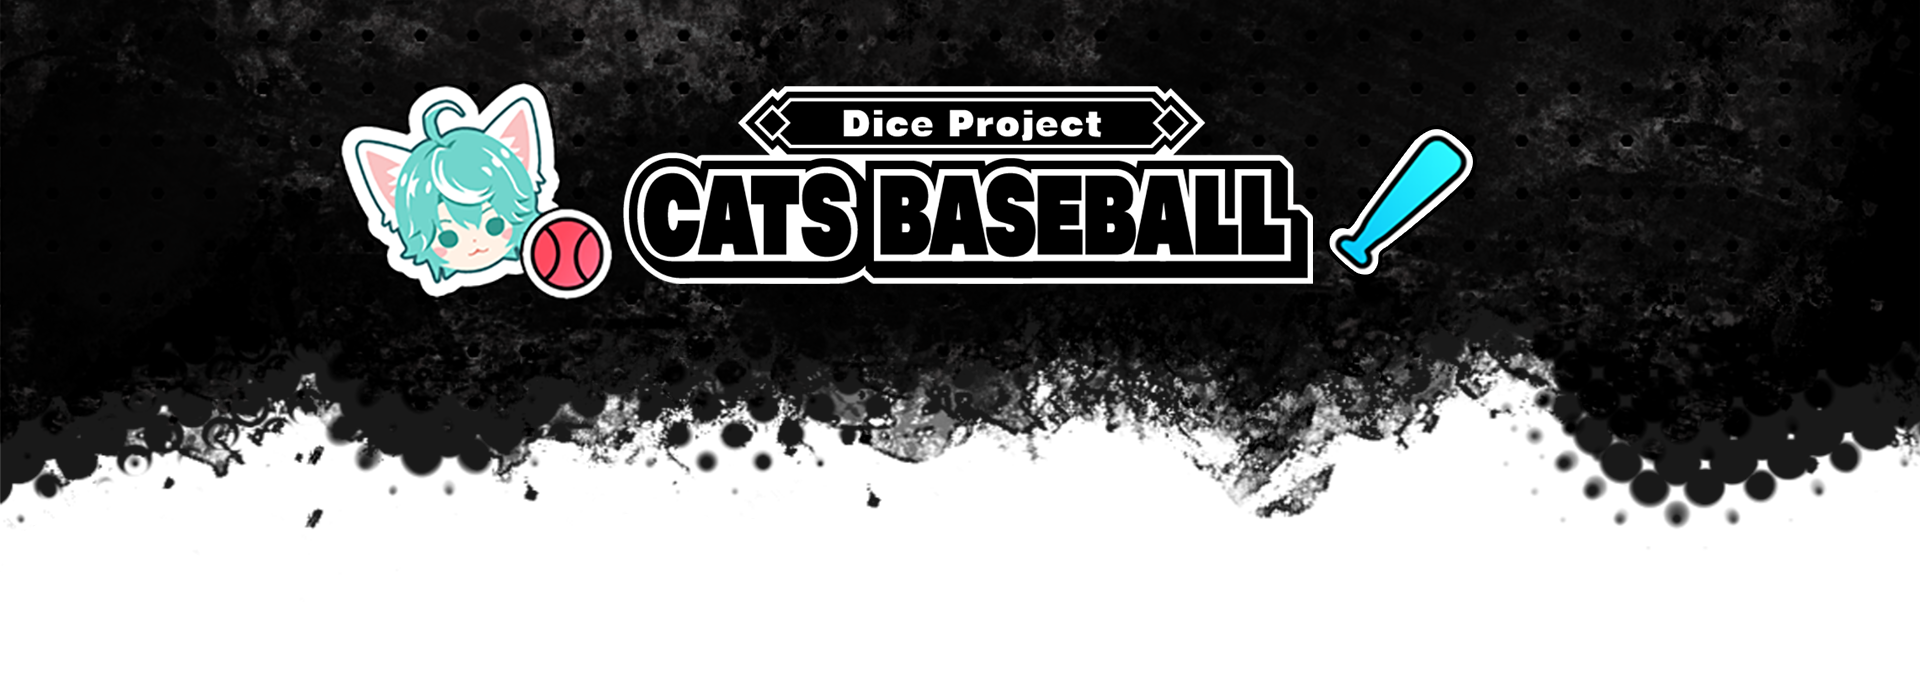 Dice Project CATS BASEBALL